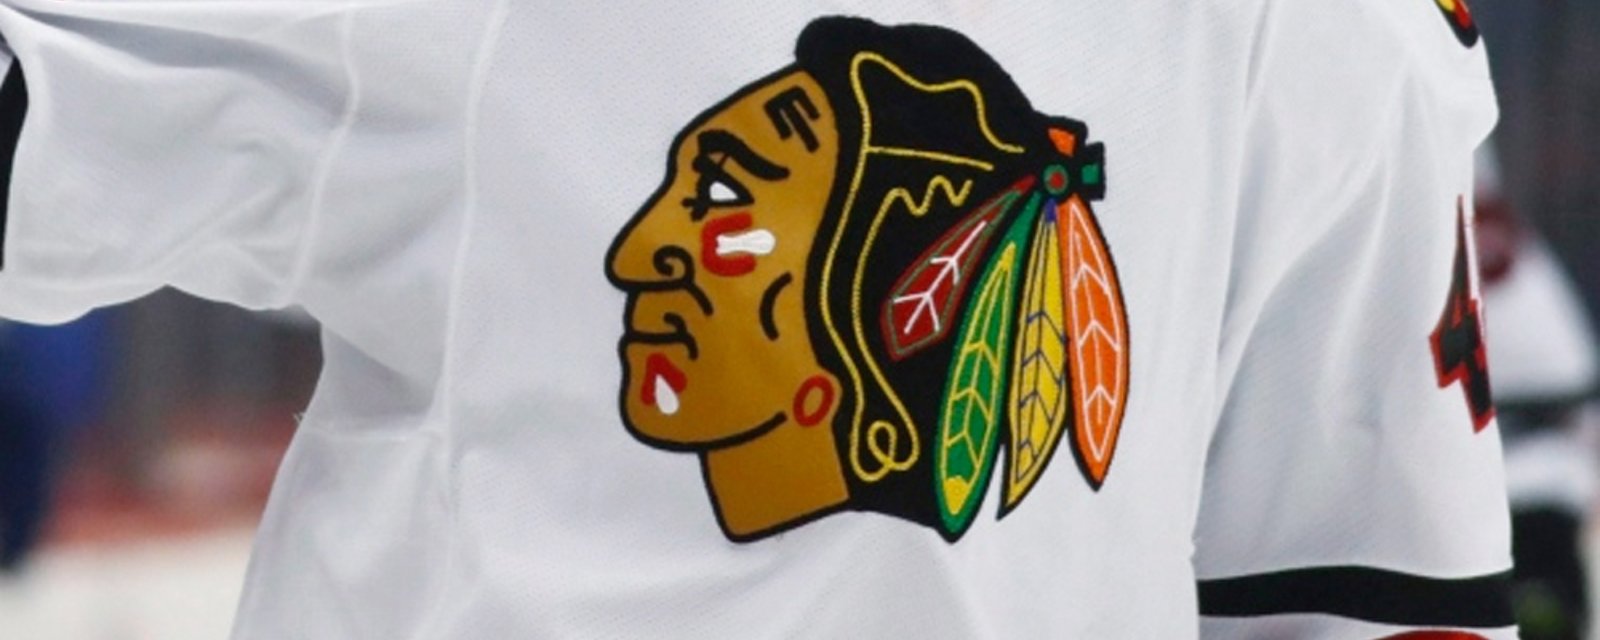 CBC begins censoring Blackhawks' team name, call them “Chicago NHL team”